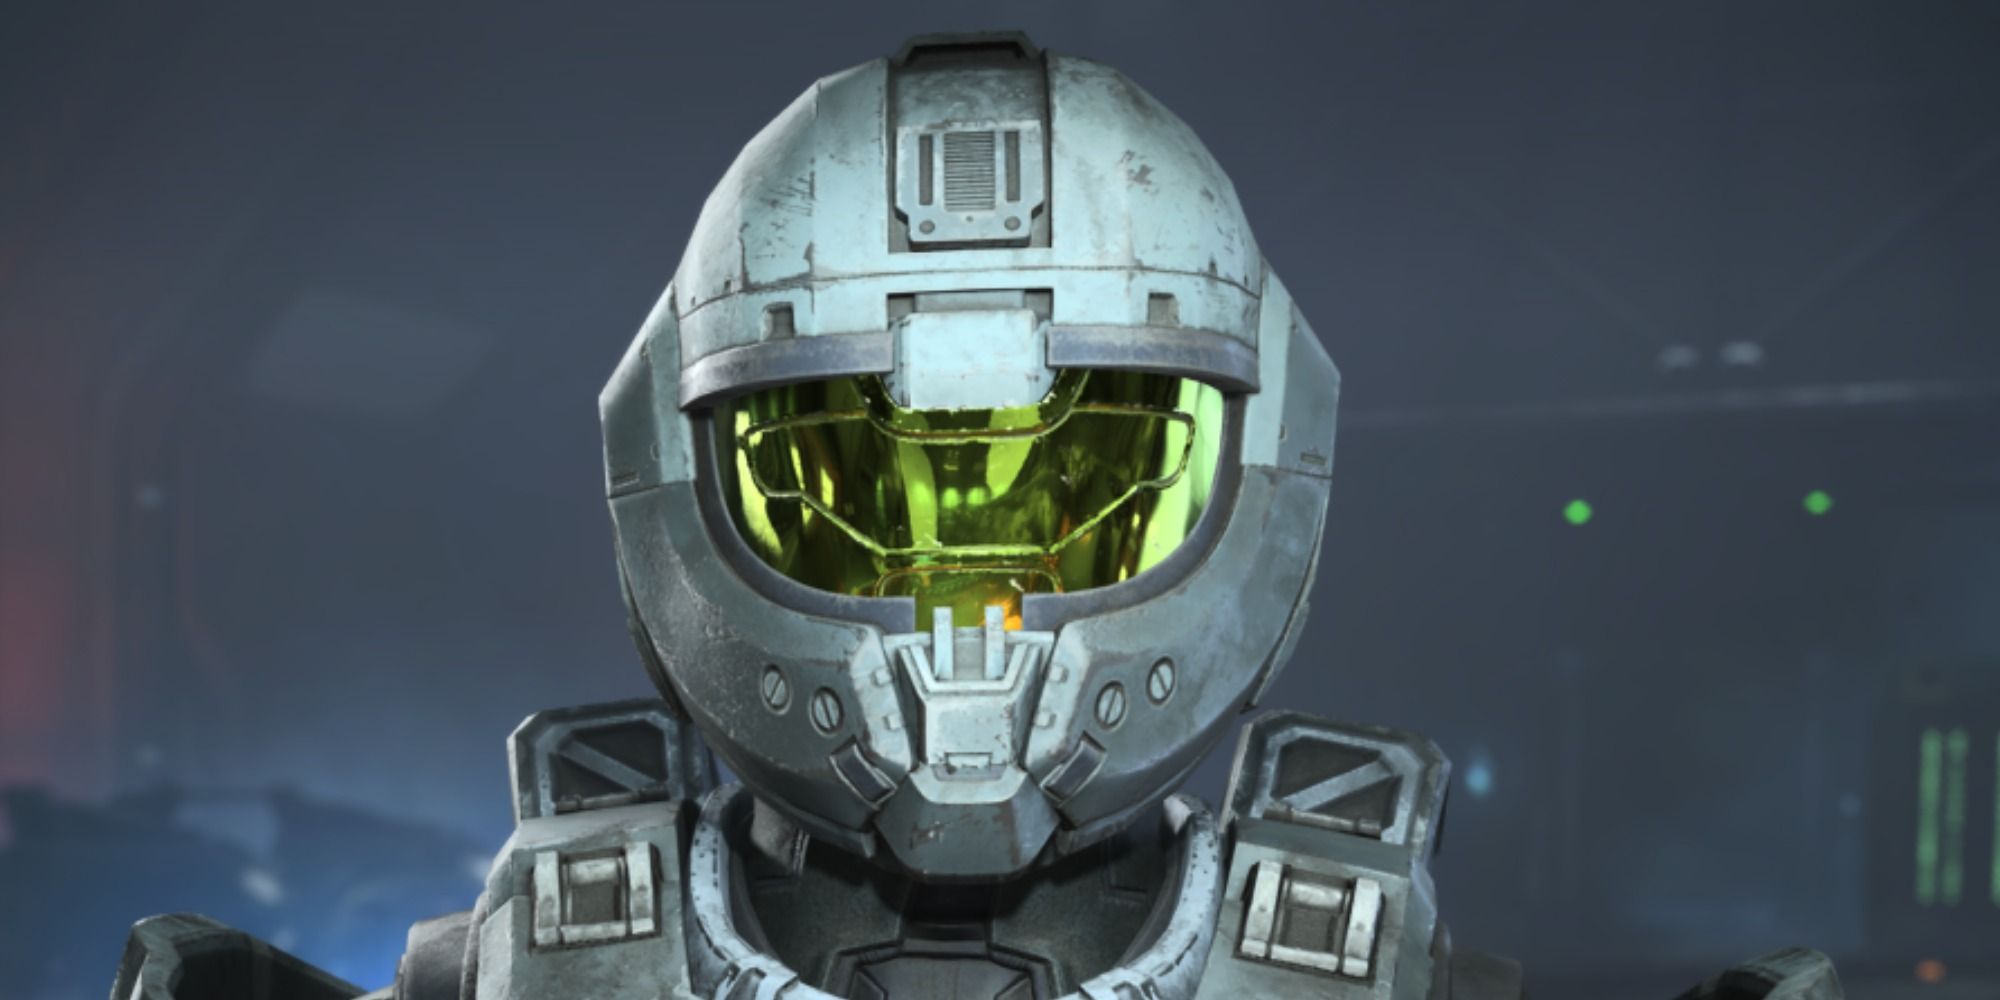 The Brawler Helmet in Halo Infinite